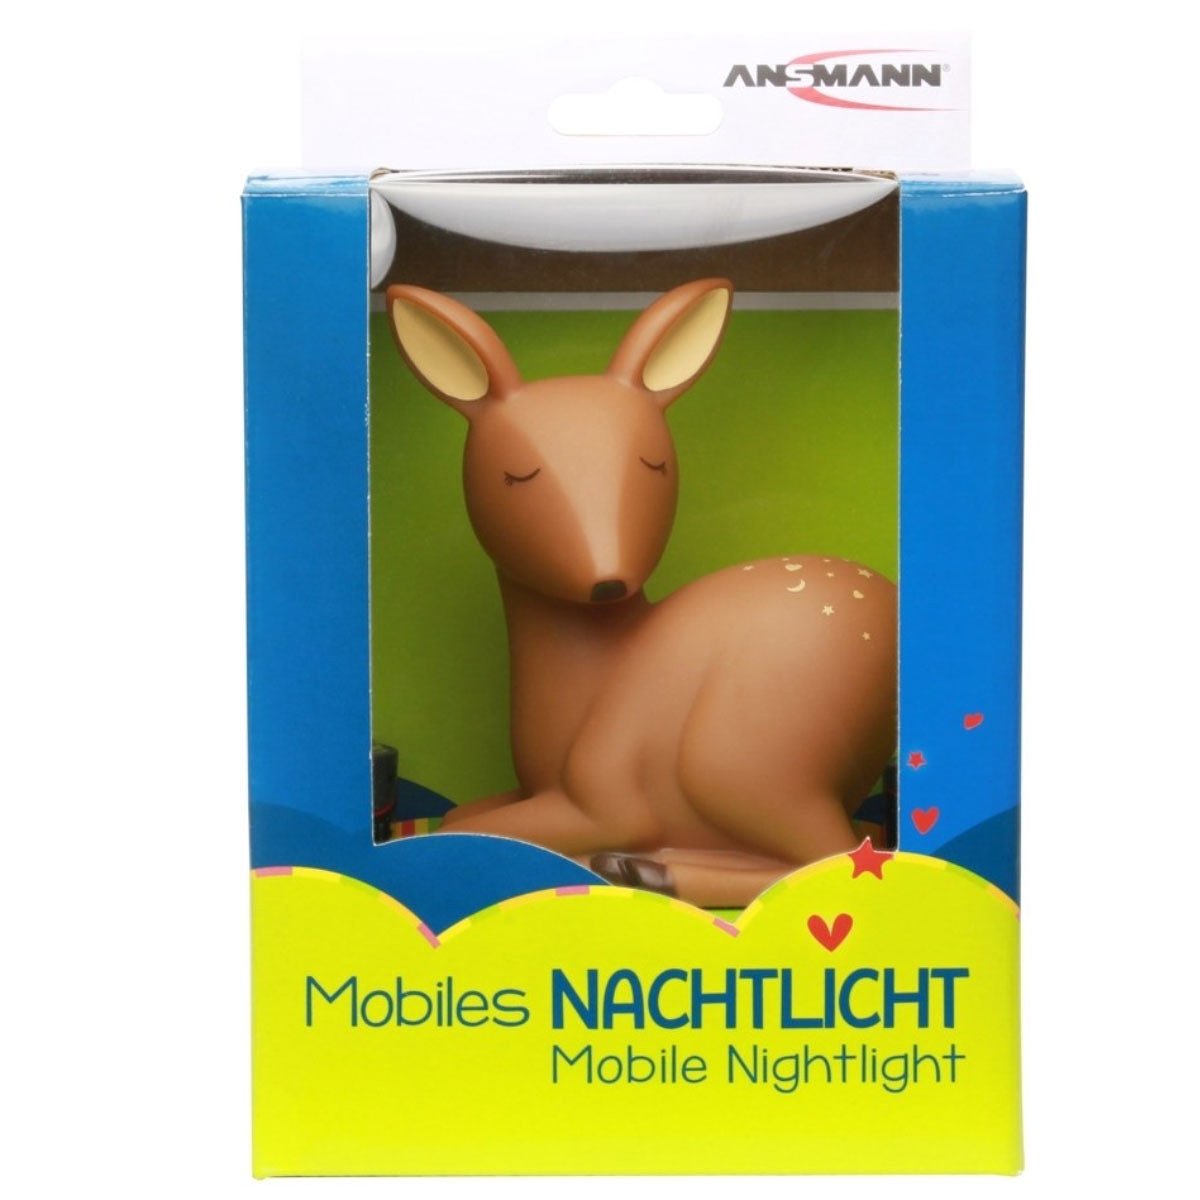 Mobile night light deer mobile, the LED LIGHT sleep aid for children as a deer figure